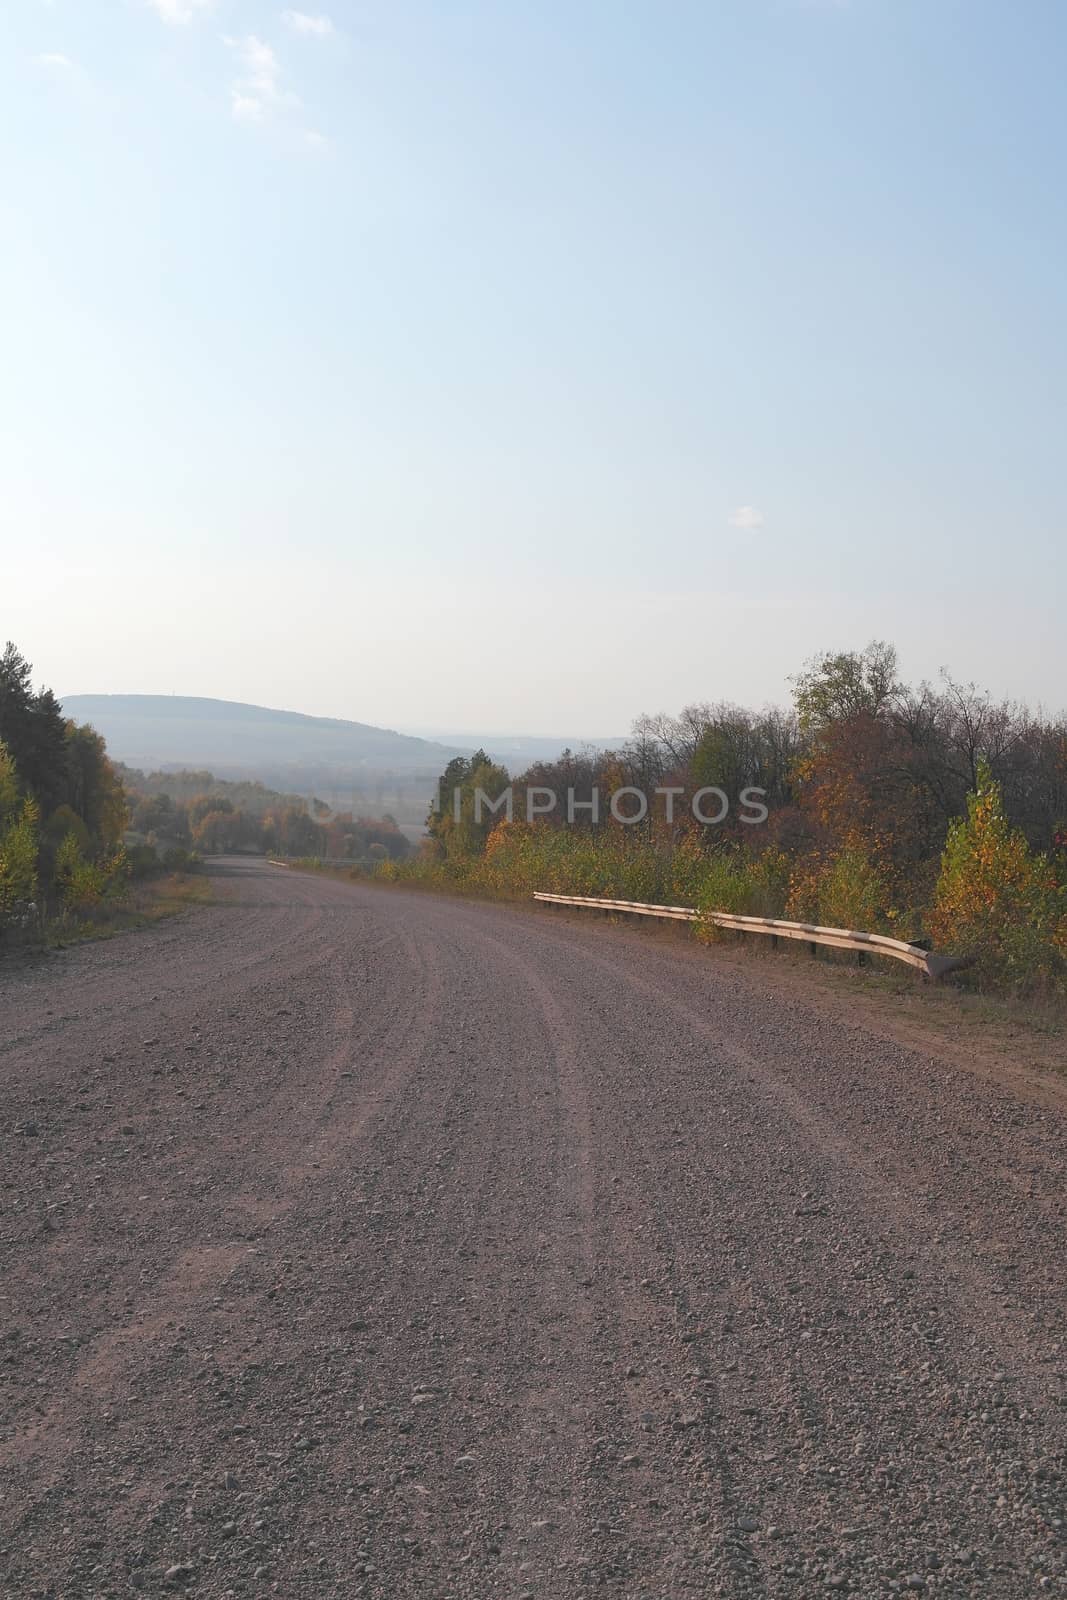 Road on the mountain, autumn landscape